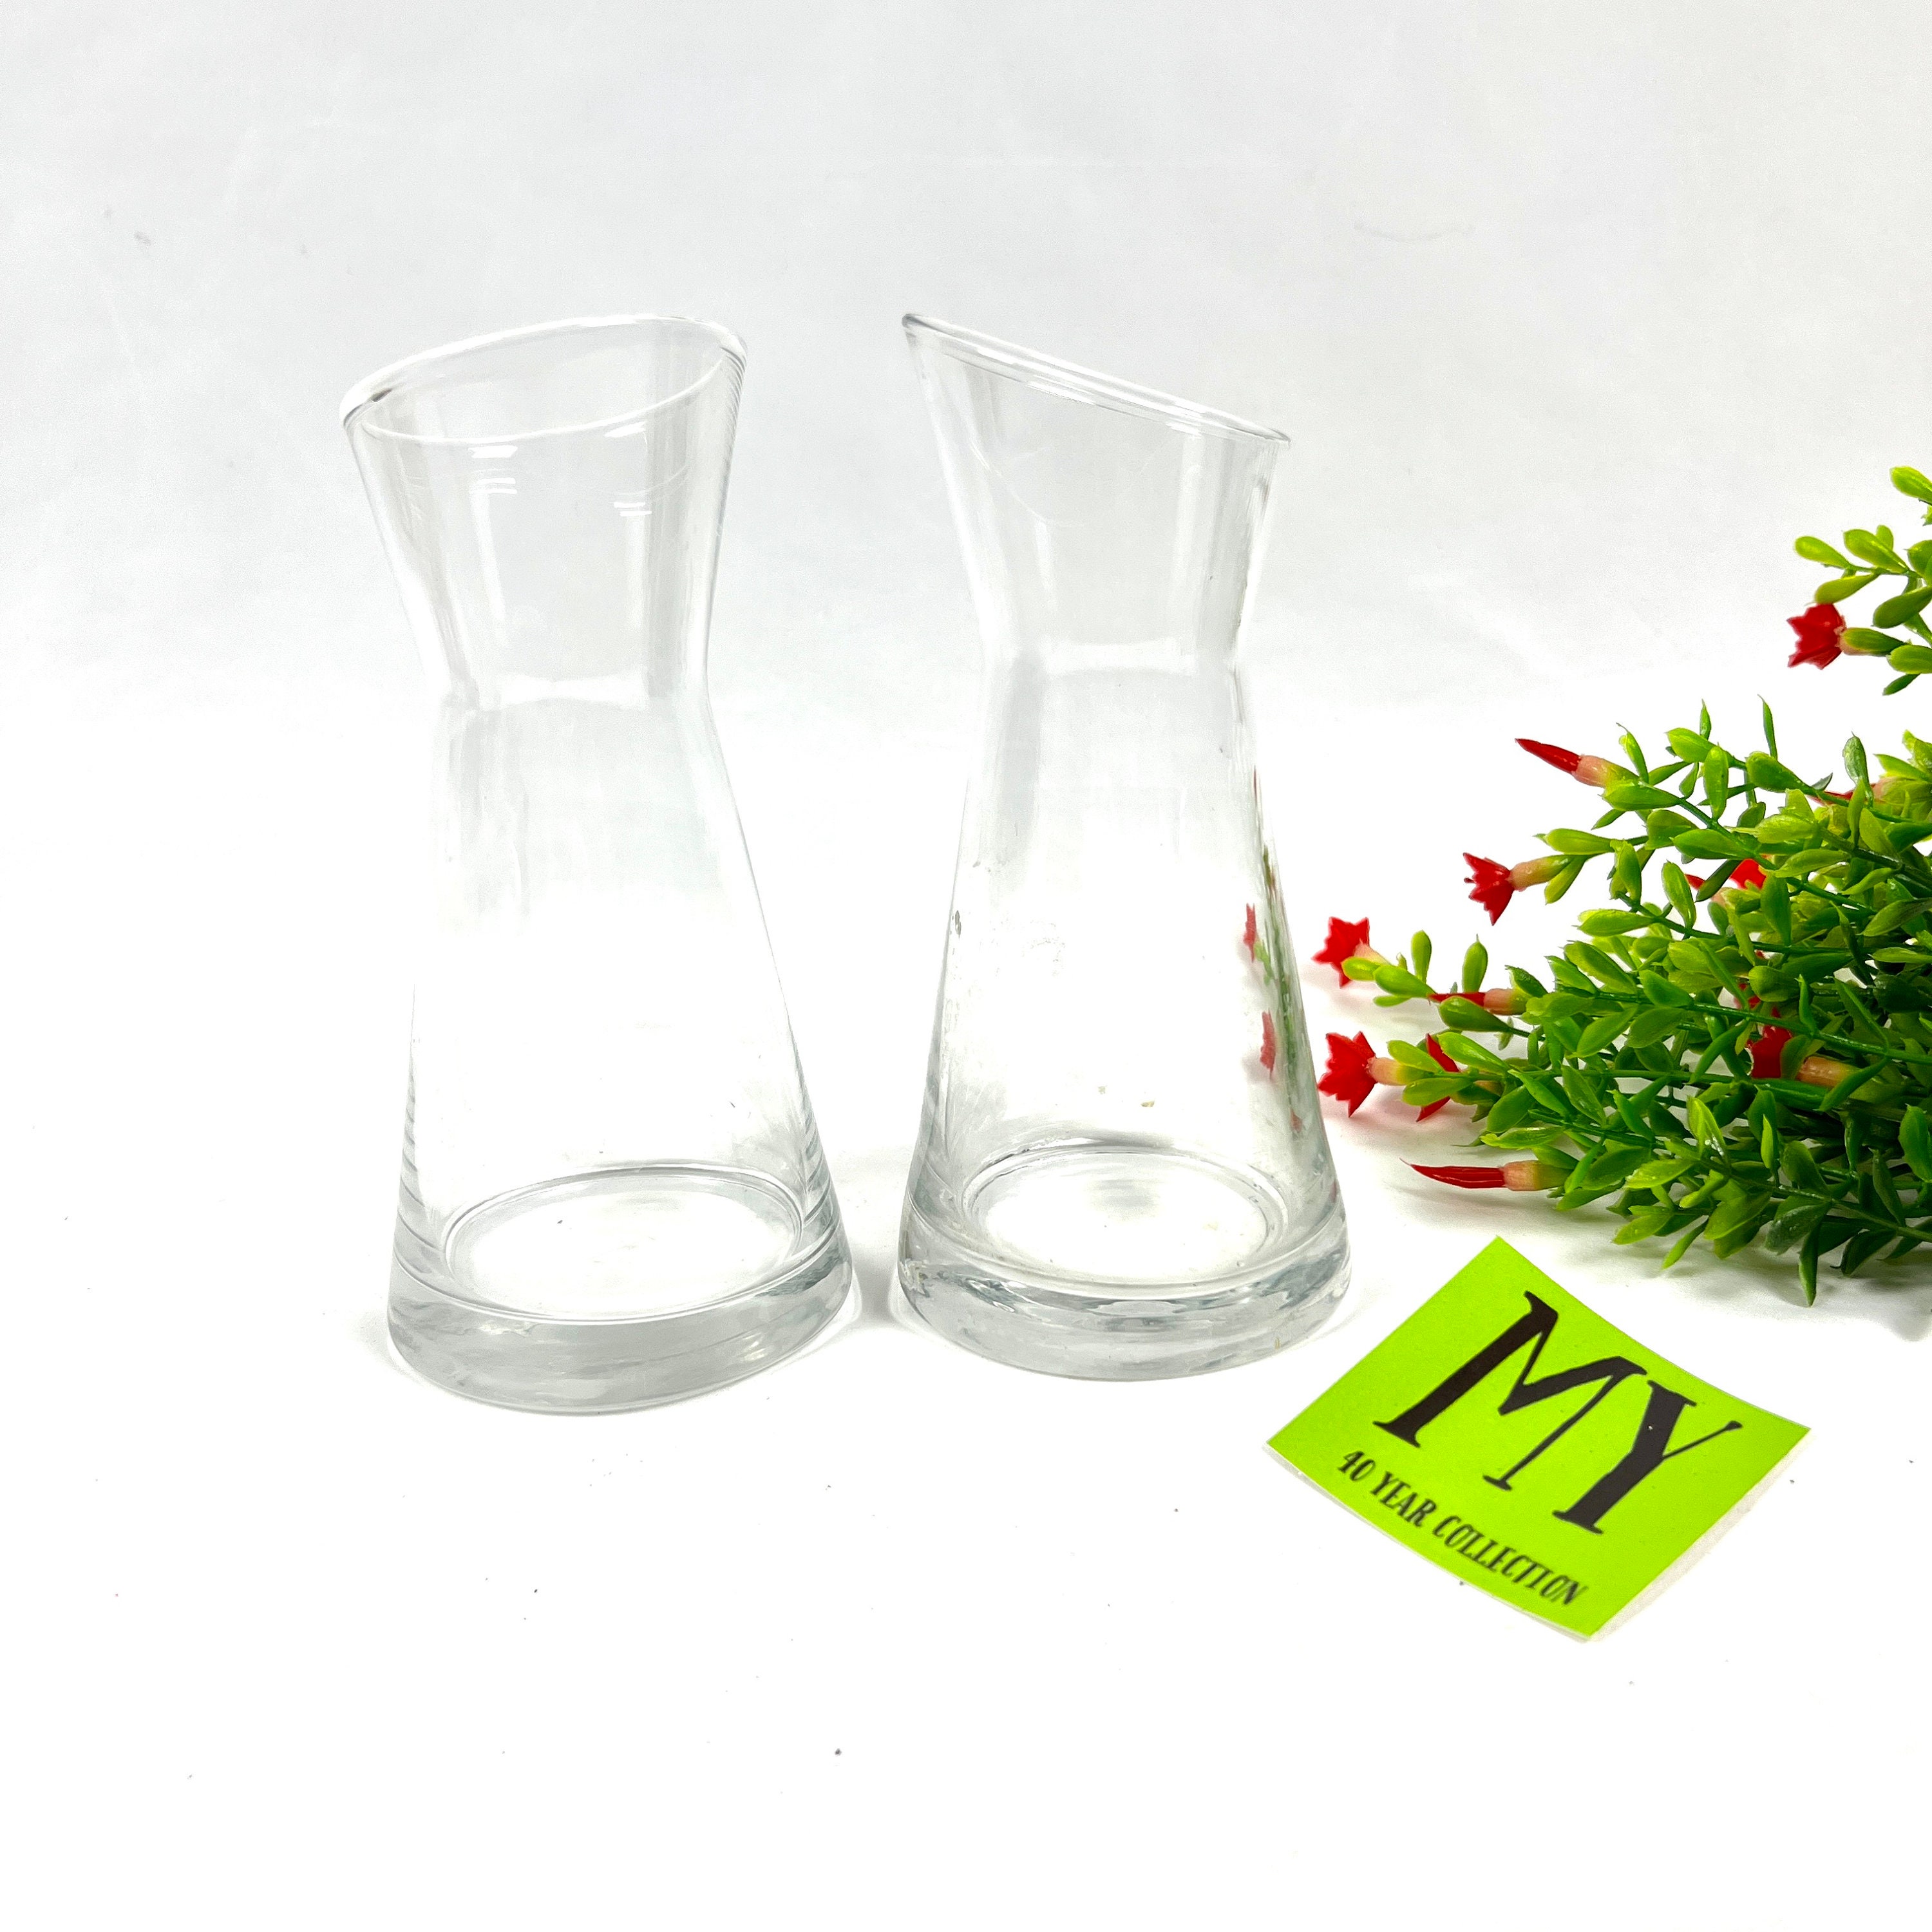 Handblown Glass Carafe - Short - 1 liter - The Foundry Home Goods